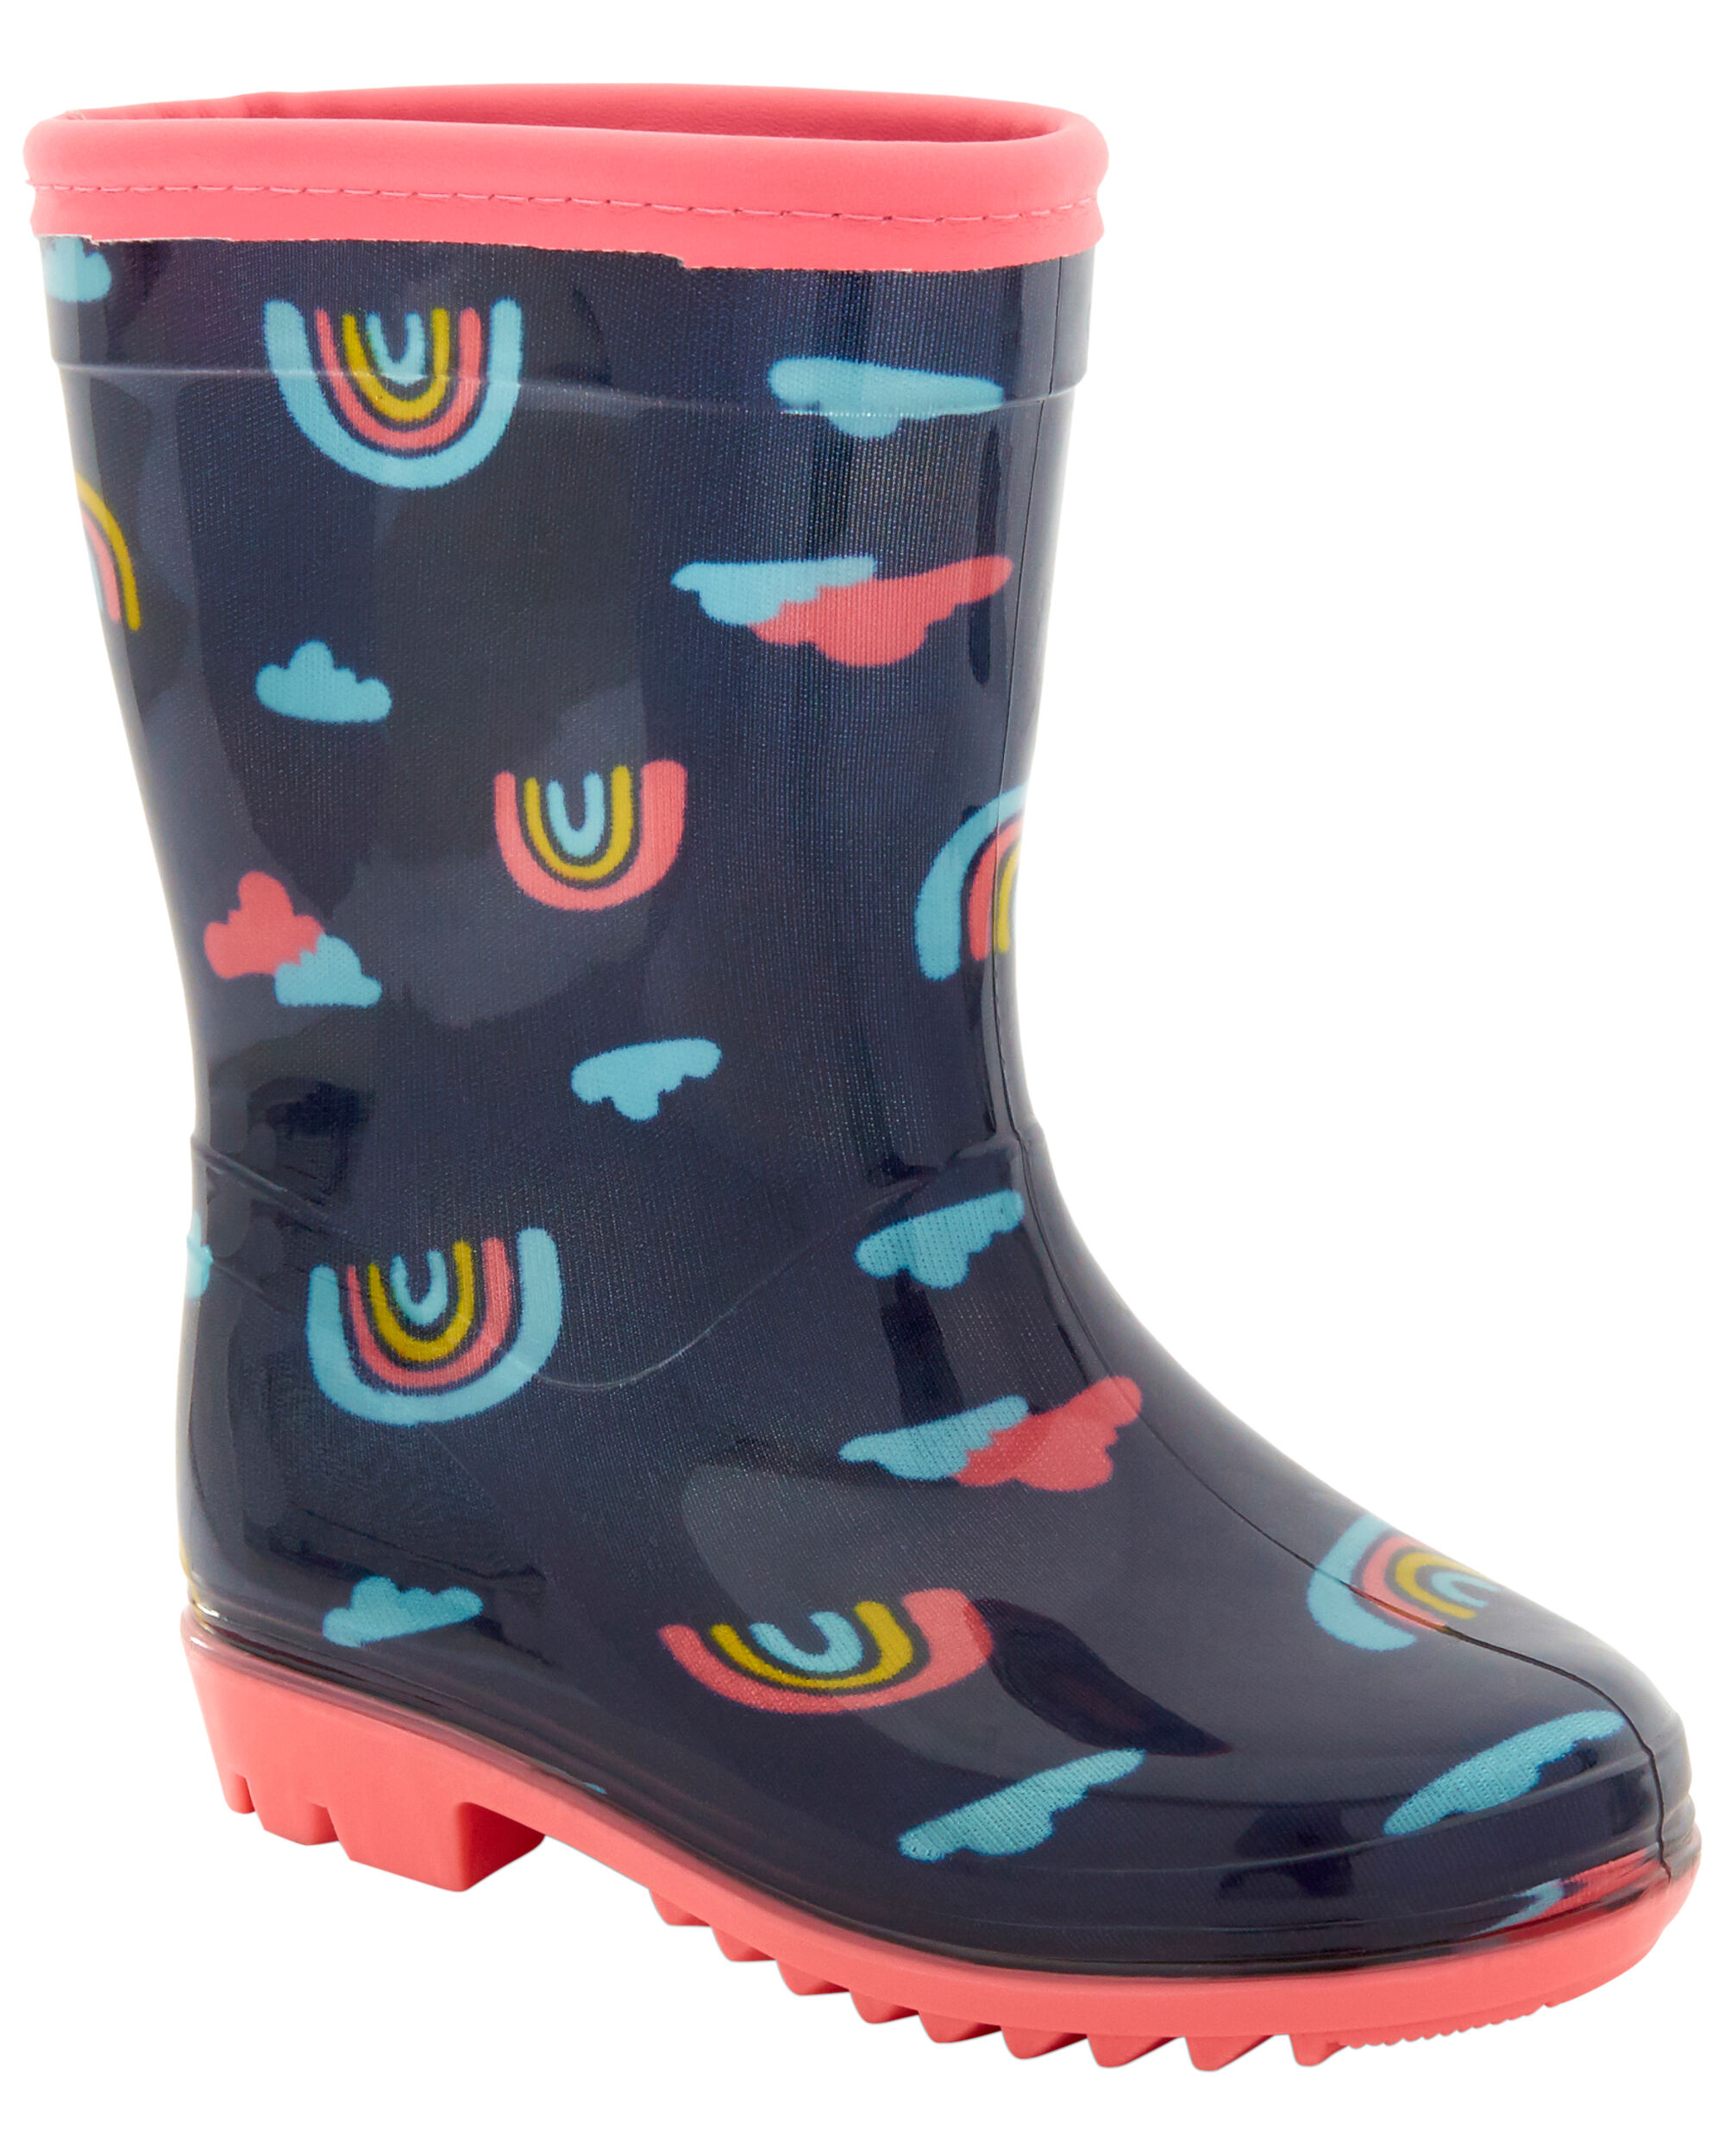 Carters Rainbow Rain Boots